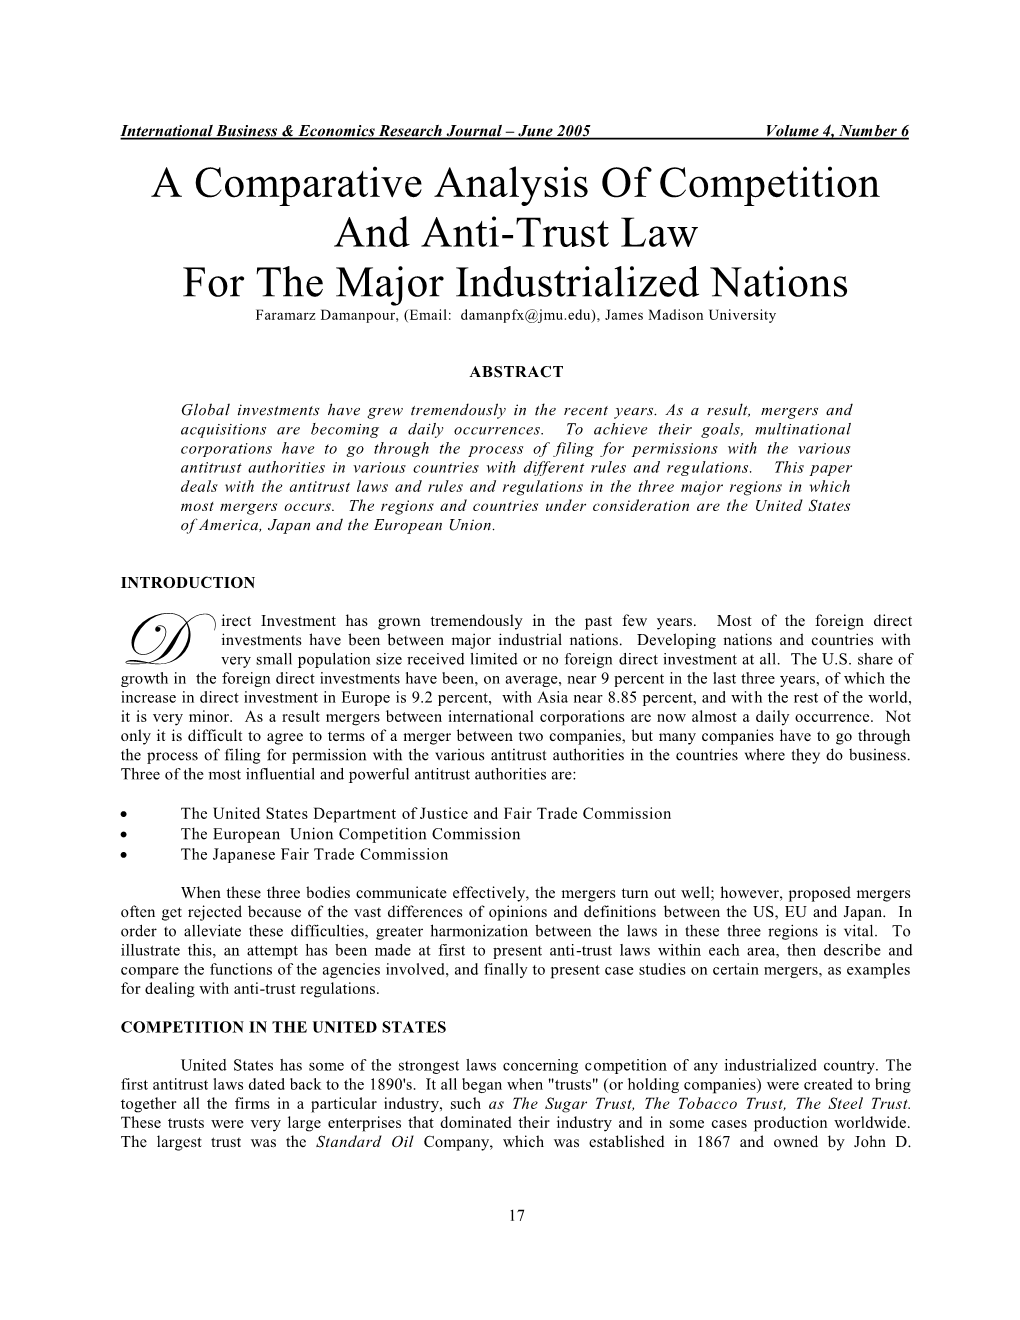 Antitrust & Competition 1